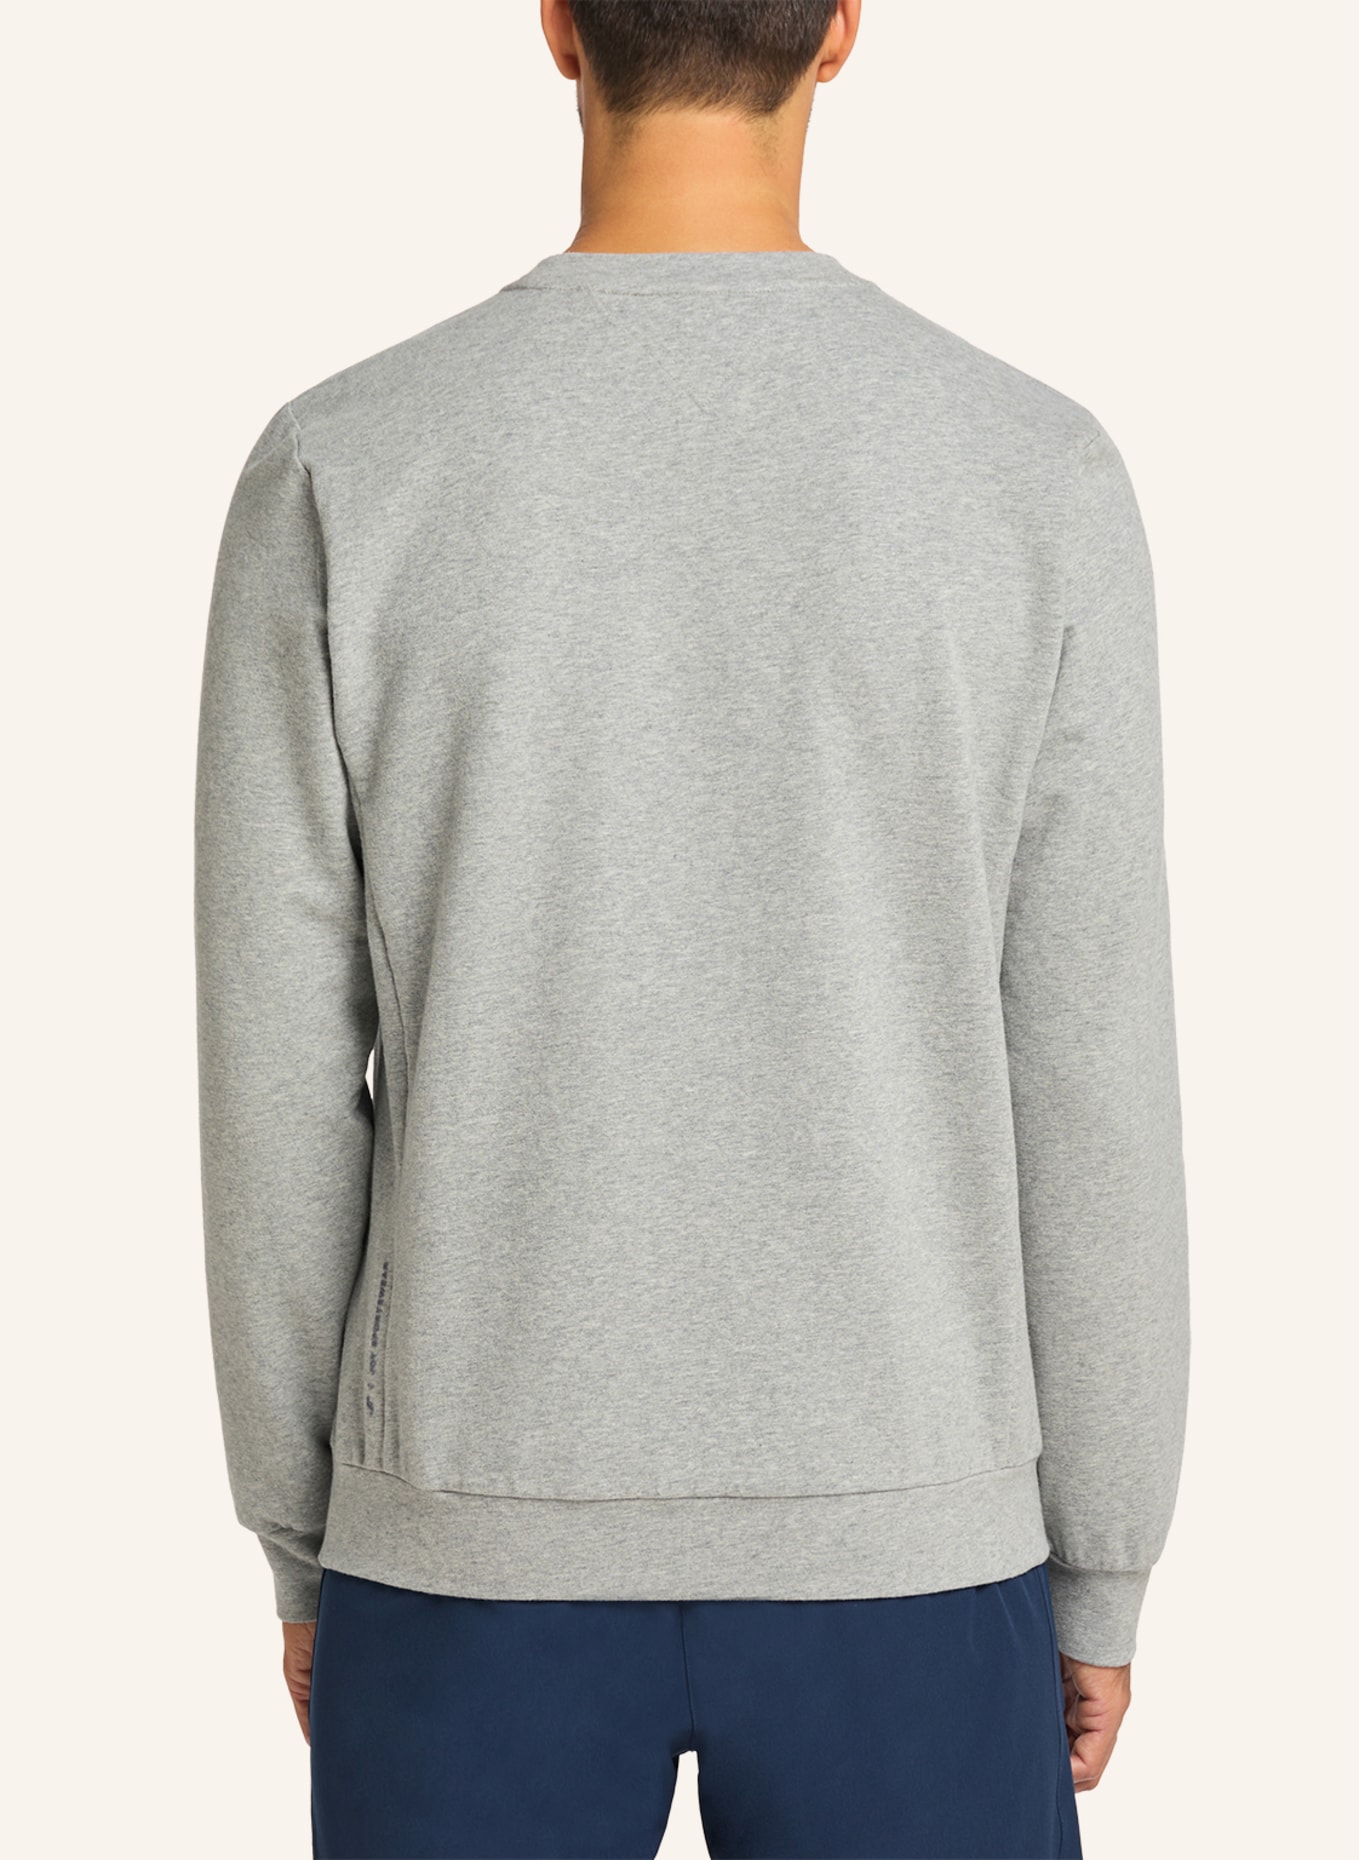 JOY sportswear Sweatshirt MICHA, Farbe: GRAU (Bild 2)